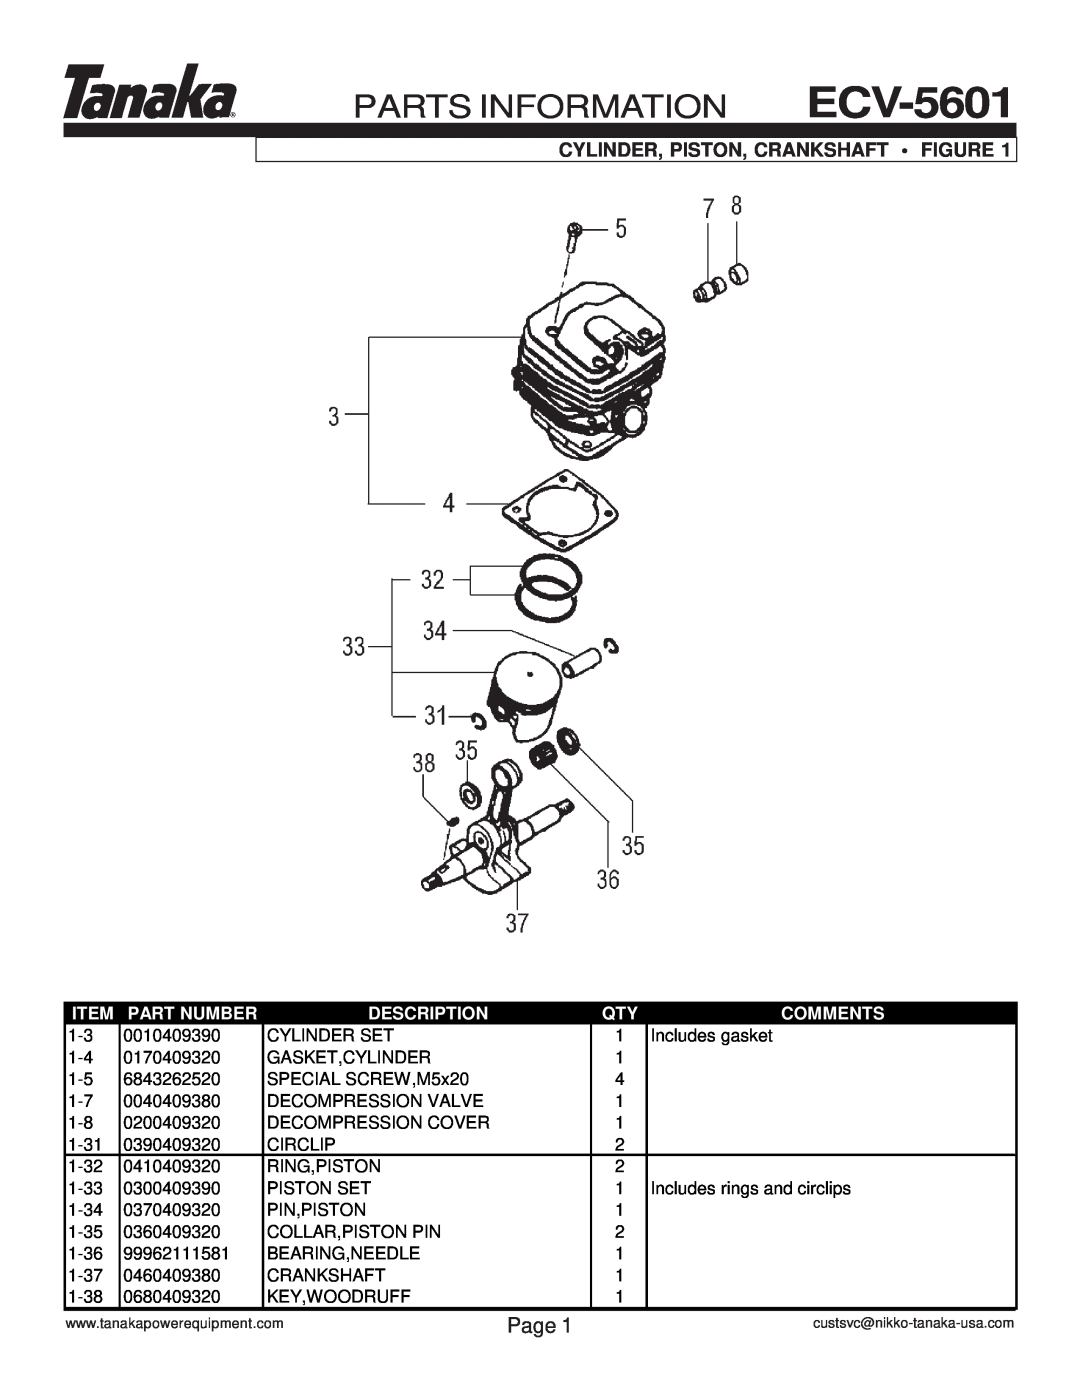 Tanaka manual PARTS INFORMATION ECV-5601, Cylinder, Piston, Crankshaft Figure, Page, Part Number, Description, Comments 